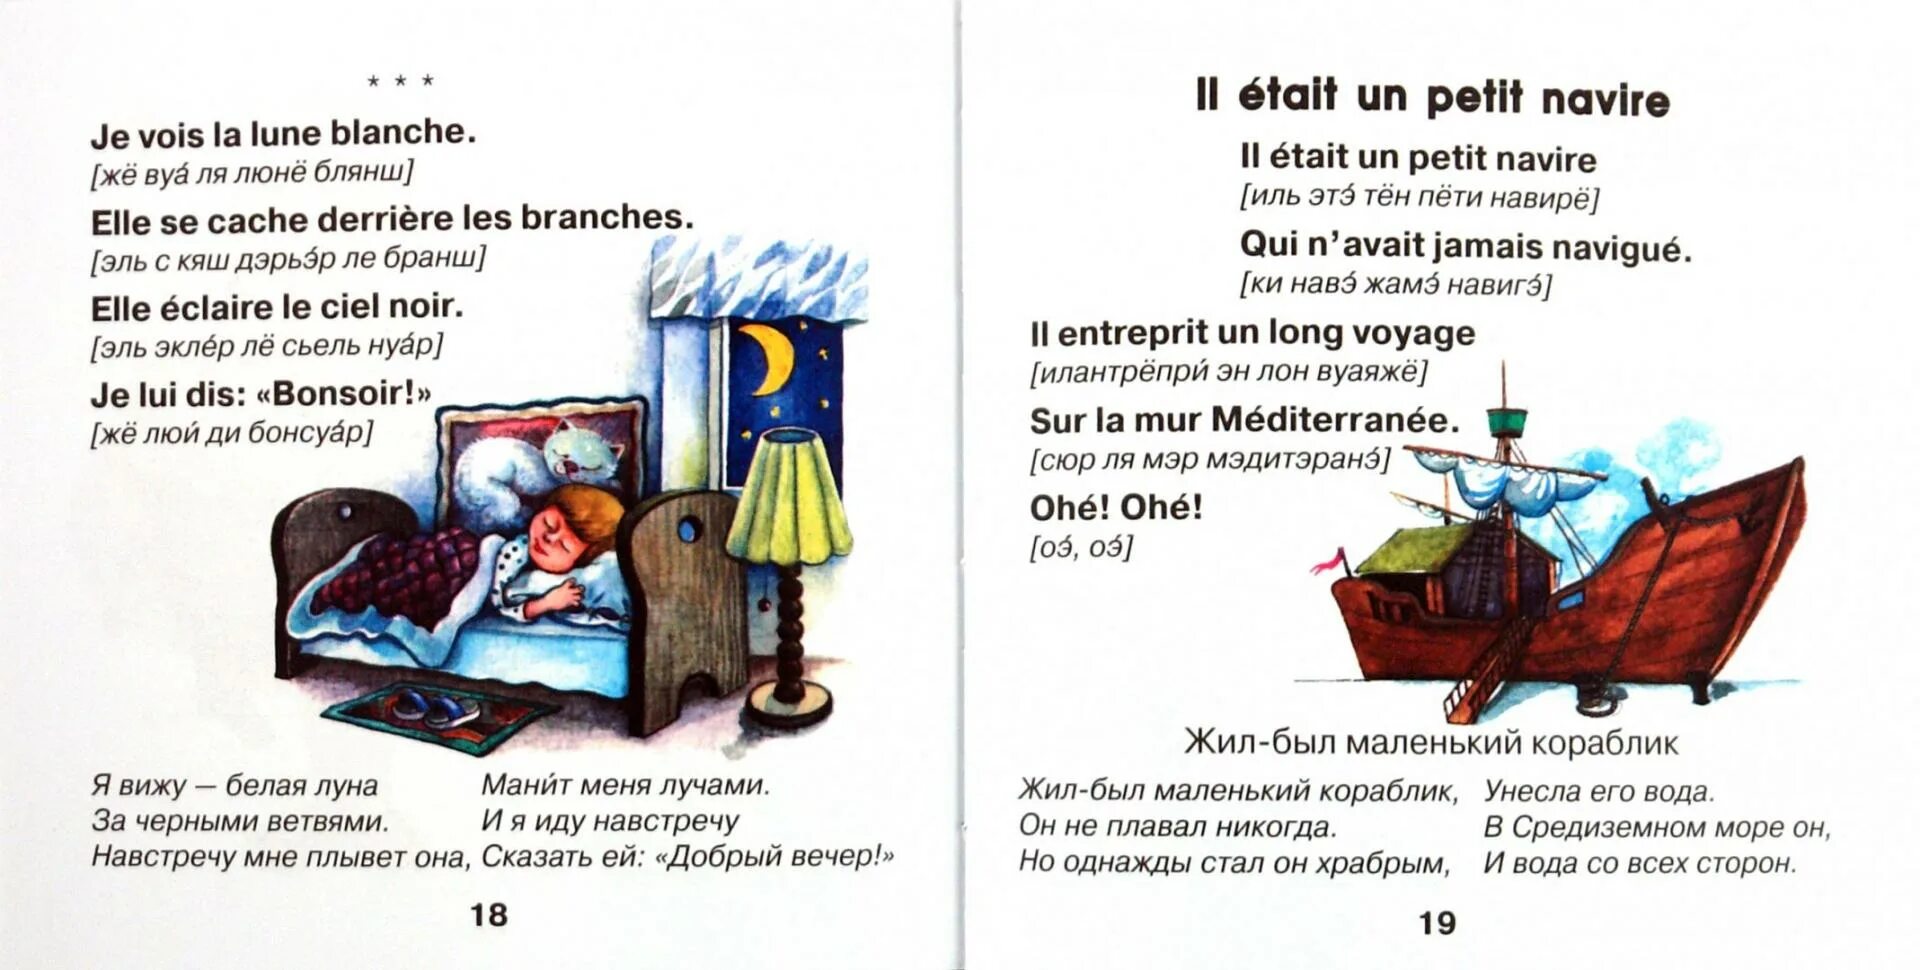 Стихотворение француза. Стихи на французском. Детские стихи на французском языке. Французский детский стик. Стишки для детей на французском языке.